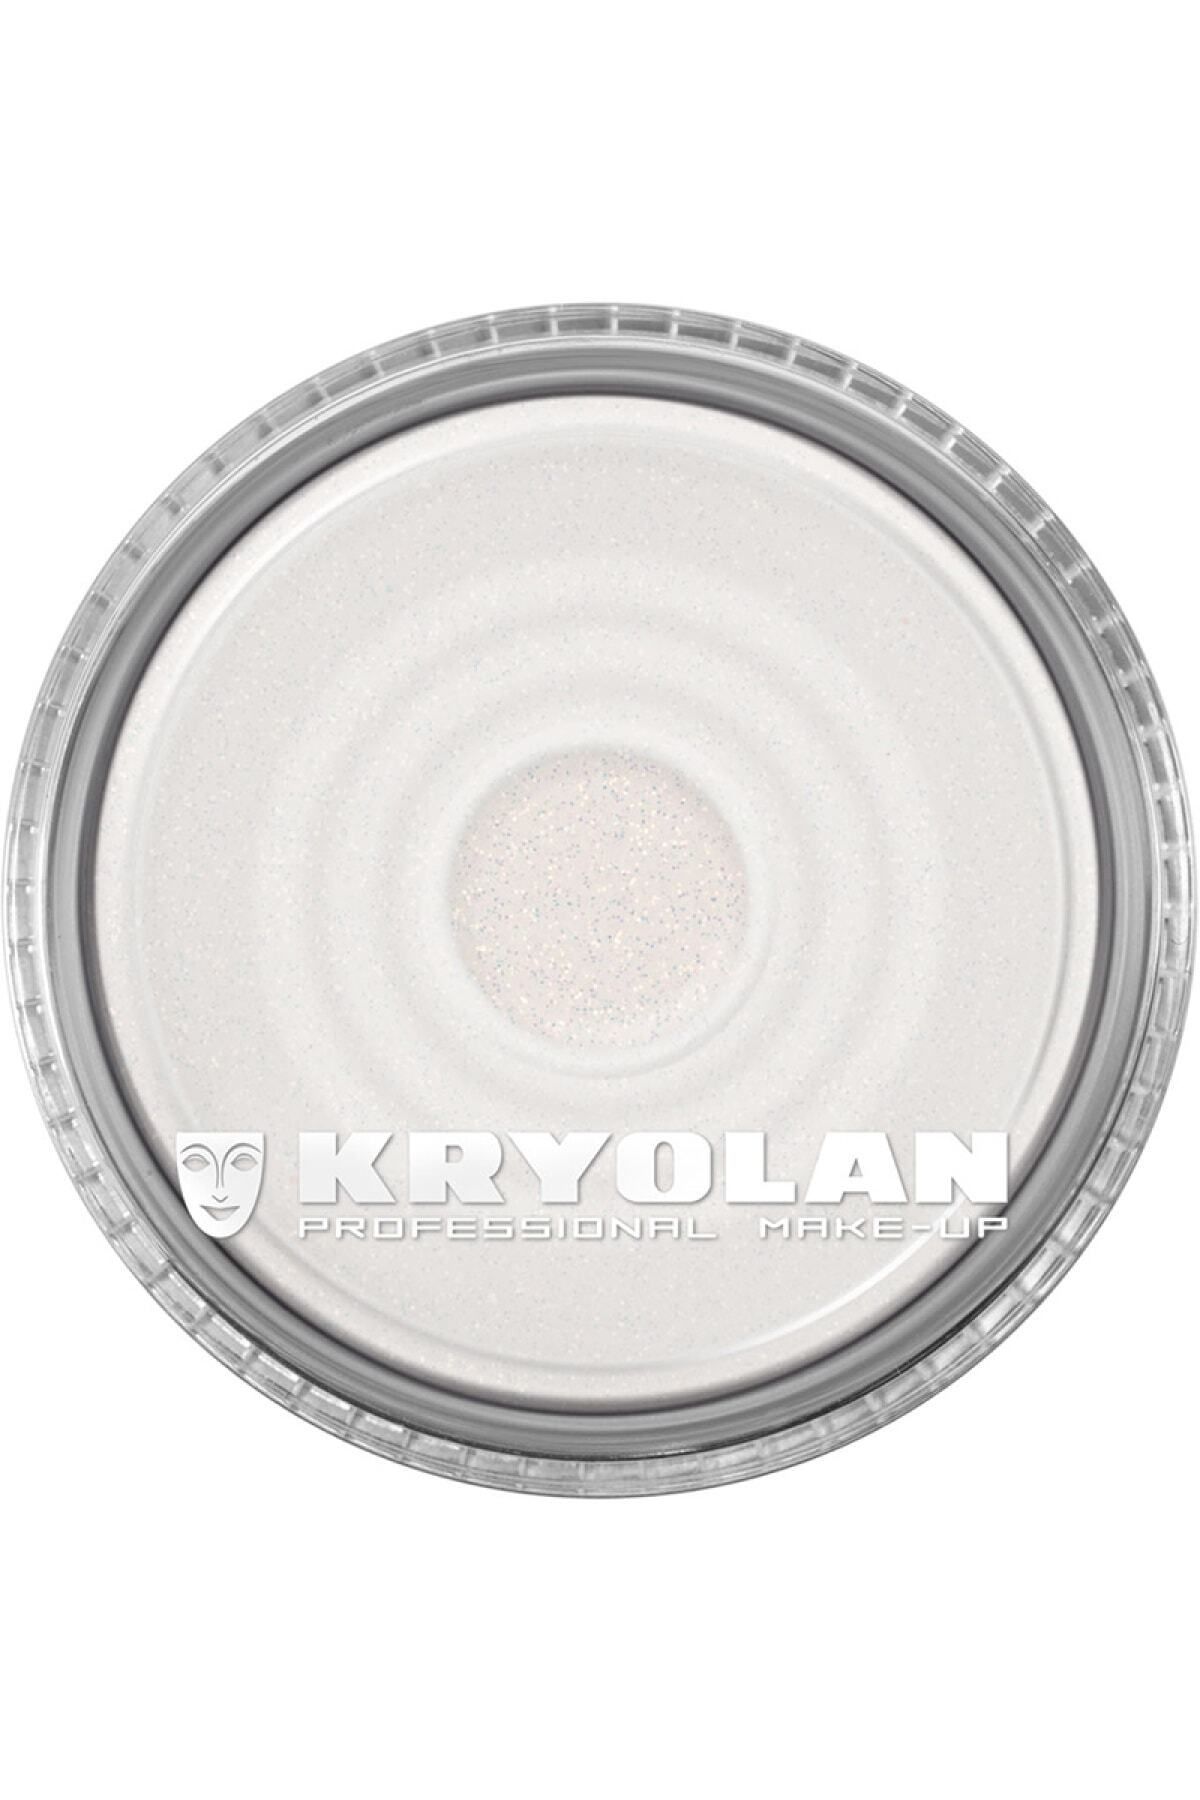 Kryolan Ince Sim Polyester Glimmer Fine 02901-03 Pearl Whıte